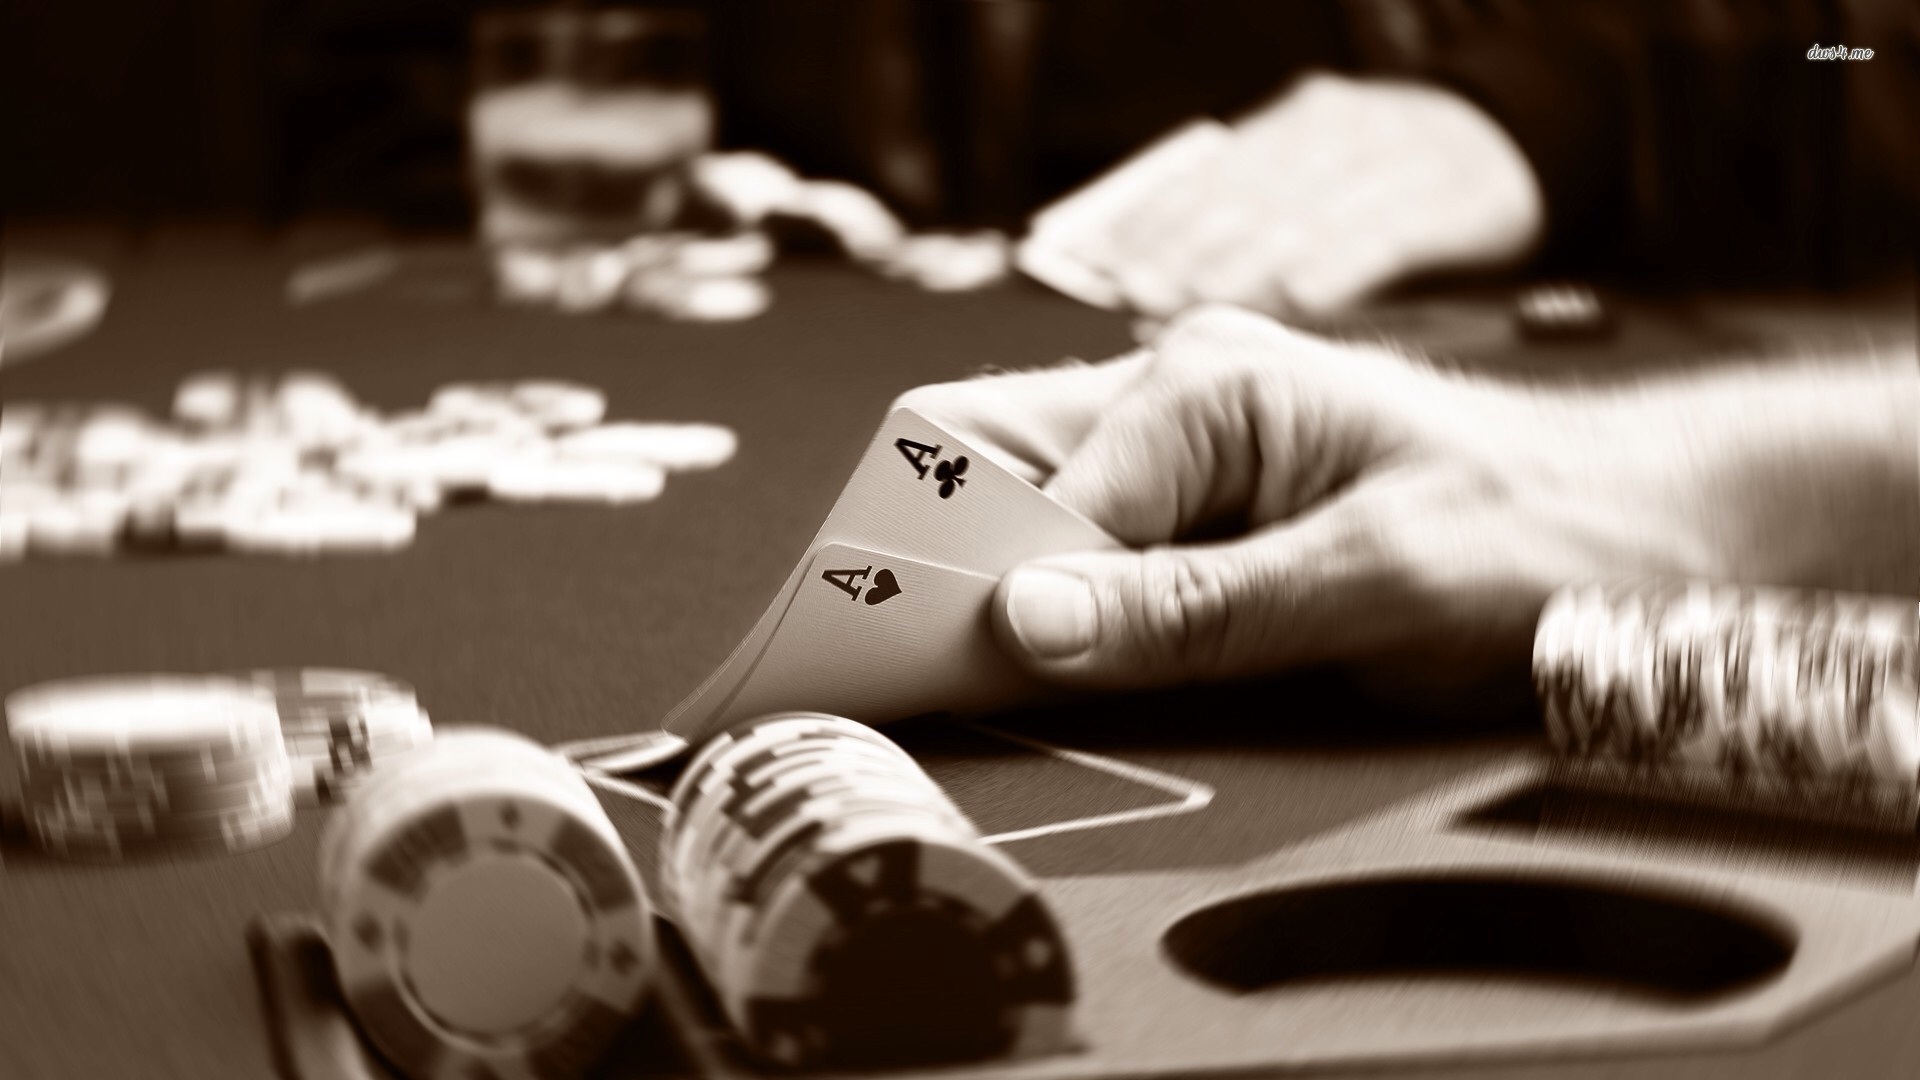 Game Poker 1920x1080